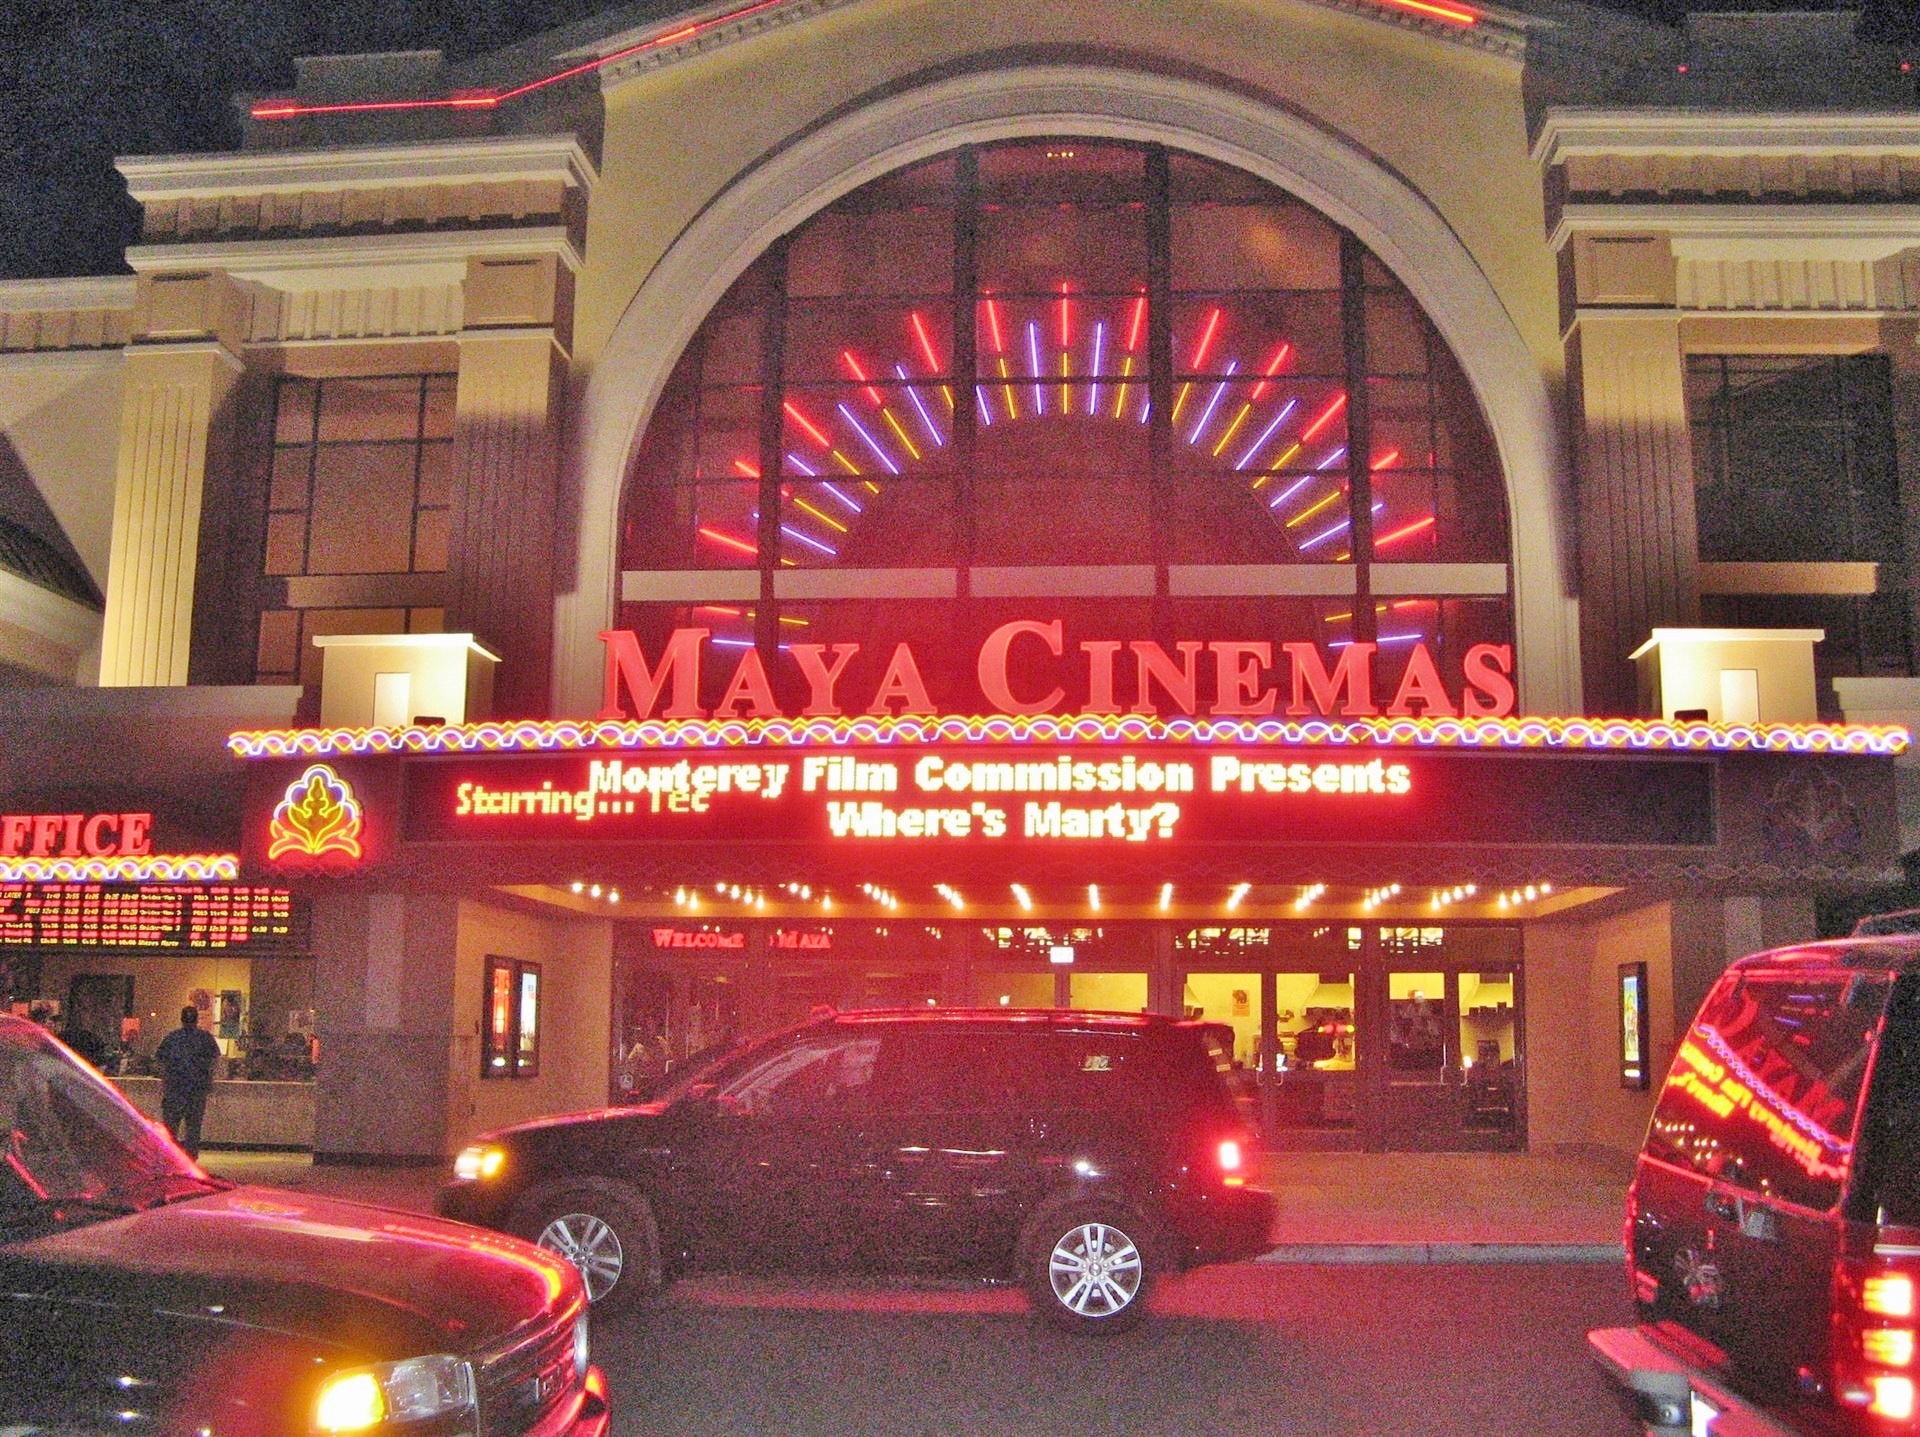 Maya cinema movie showtimes databasedop